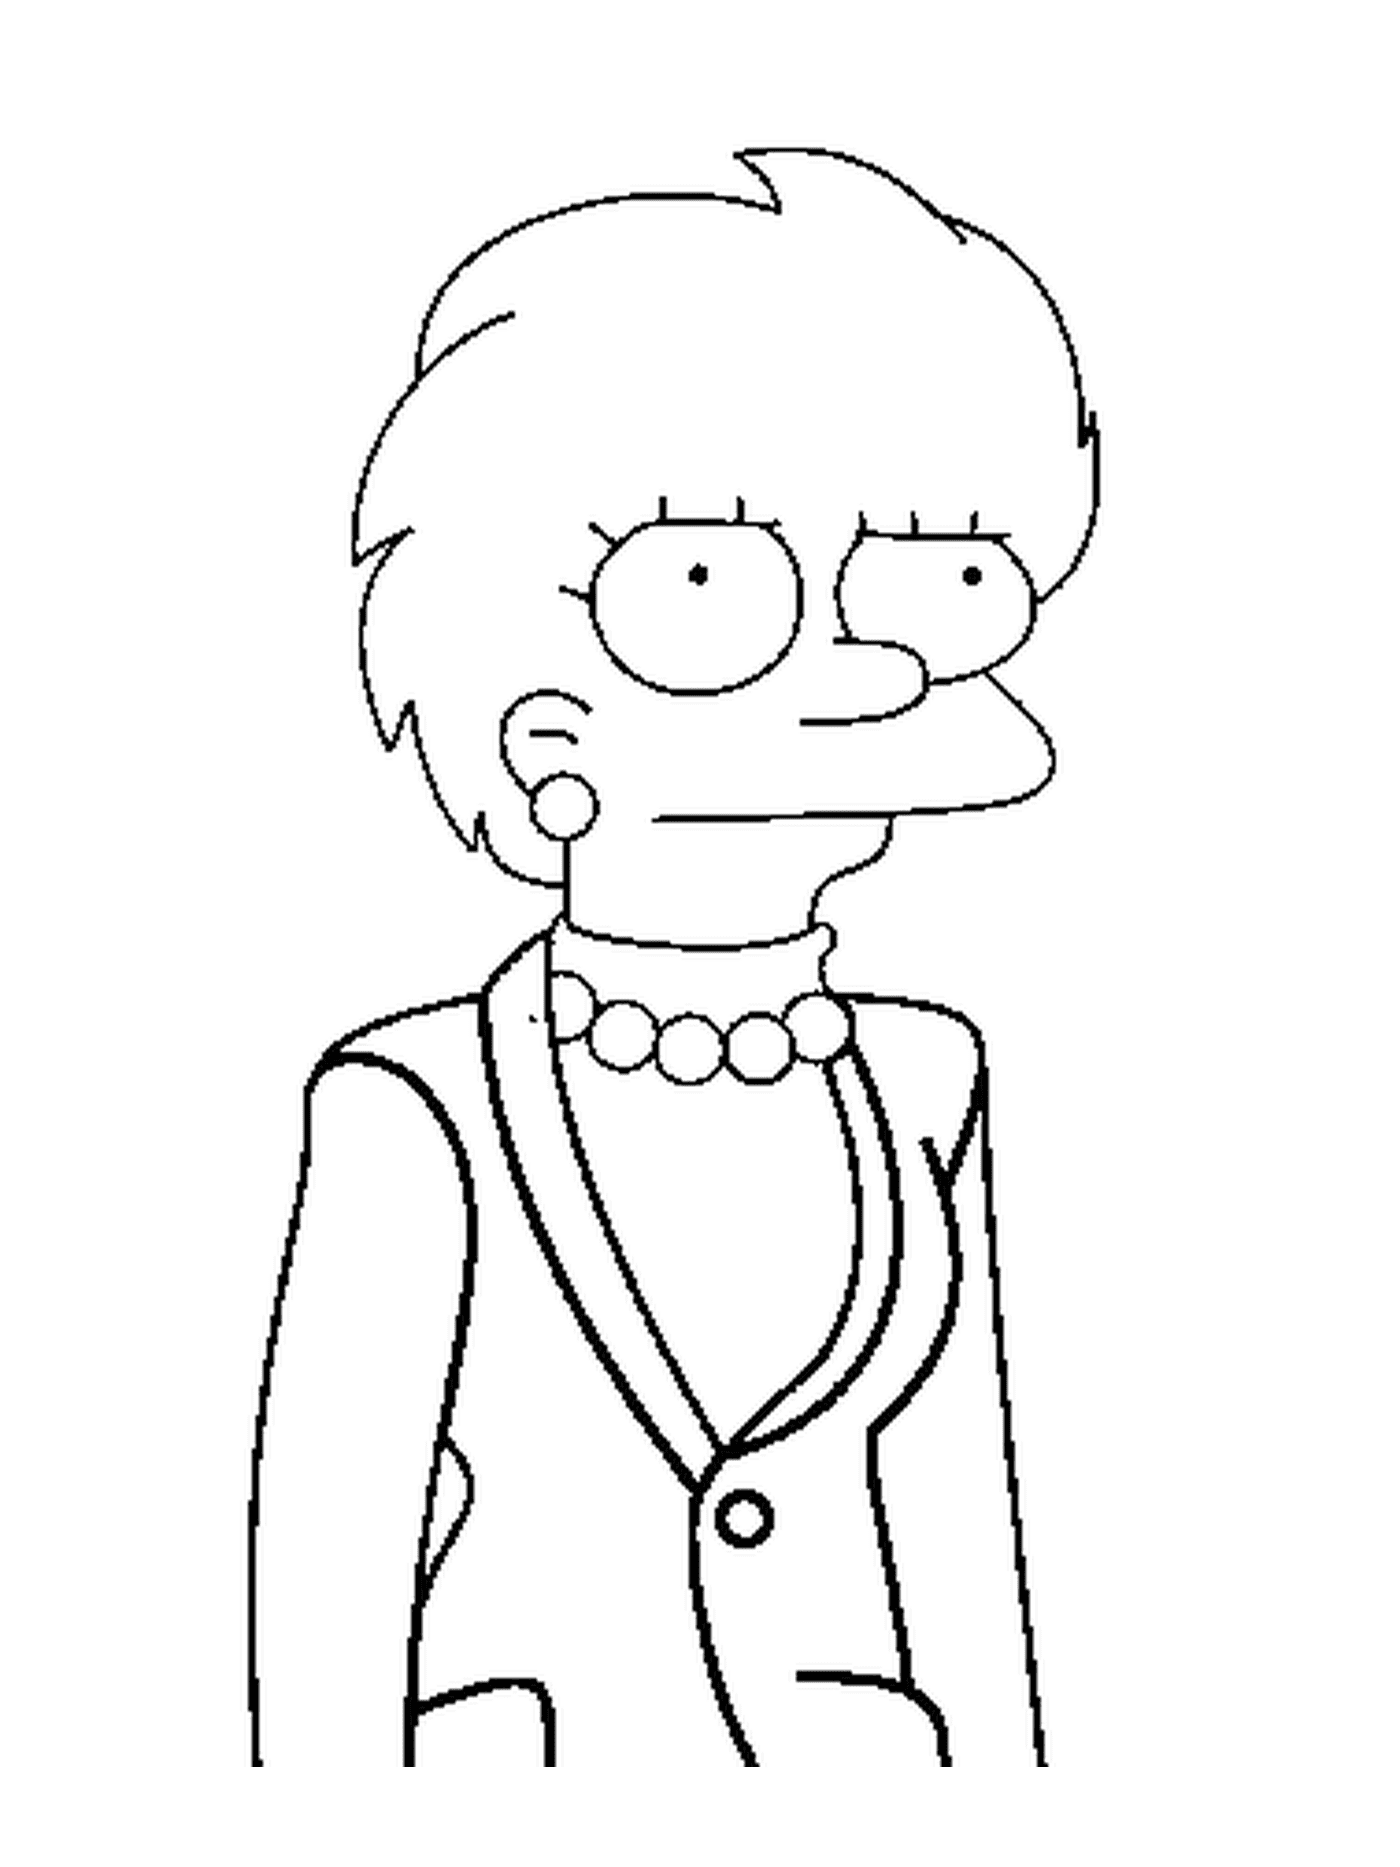  Lisa Simpson, futura presidente 